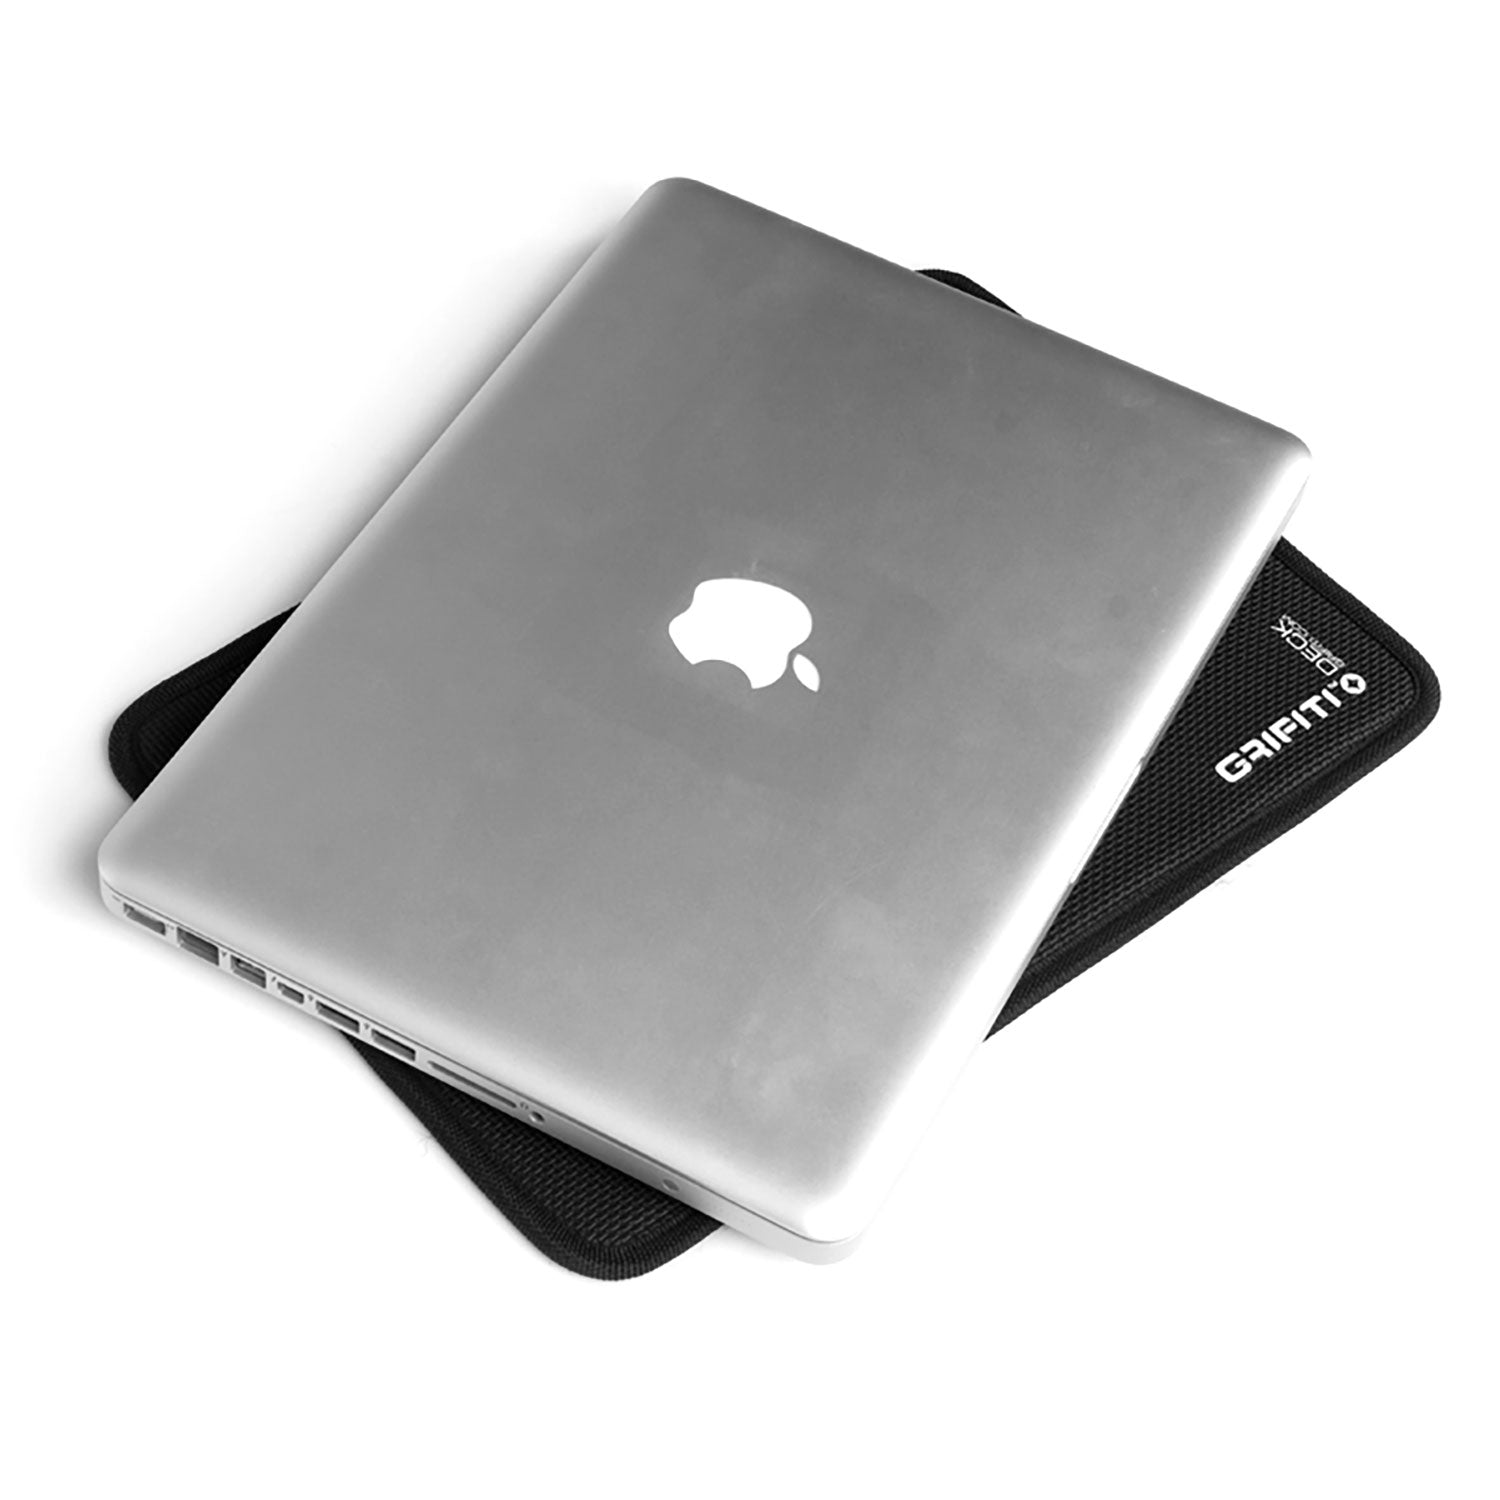 Grifiti Travel Deck Lap Desk for MacBooks Laptops Notebooks - Grifiti